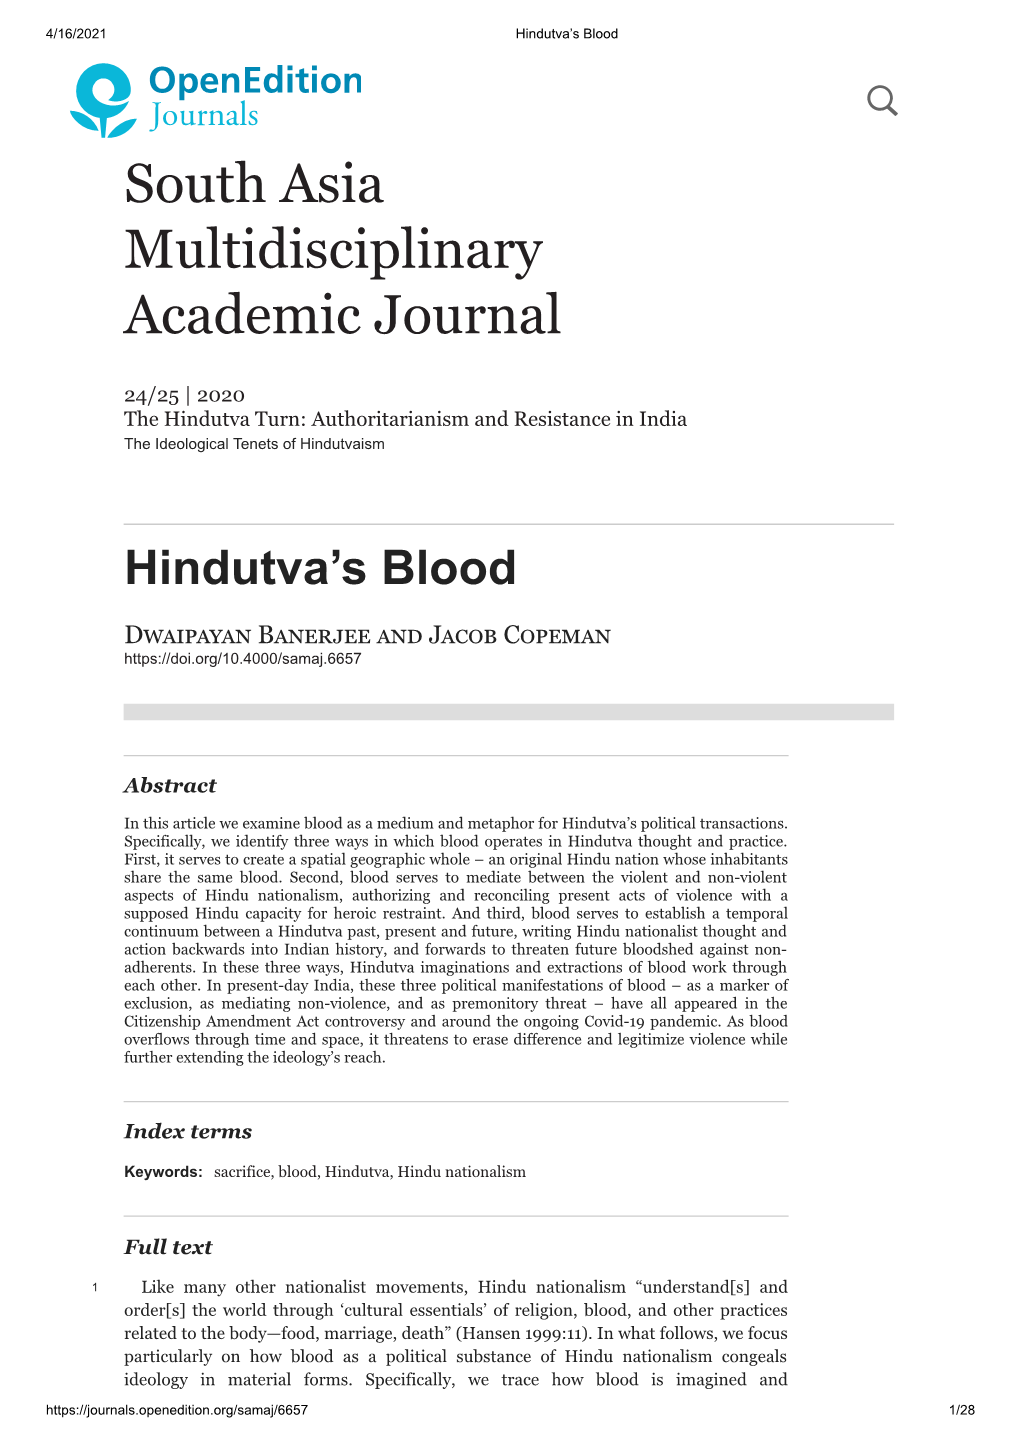 South Asia Multidisciplinary Academic Journal